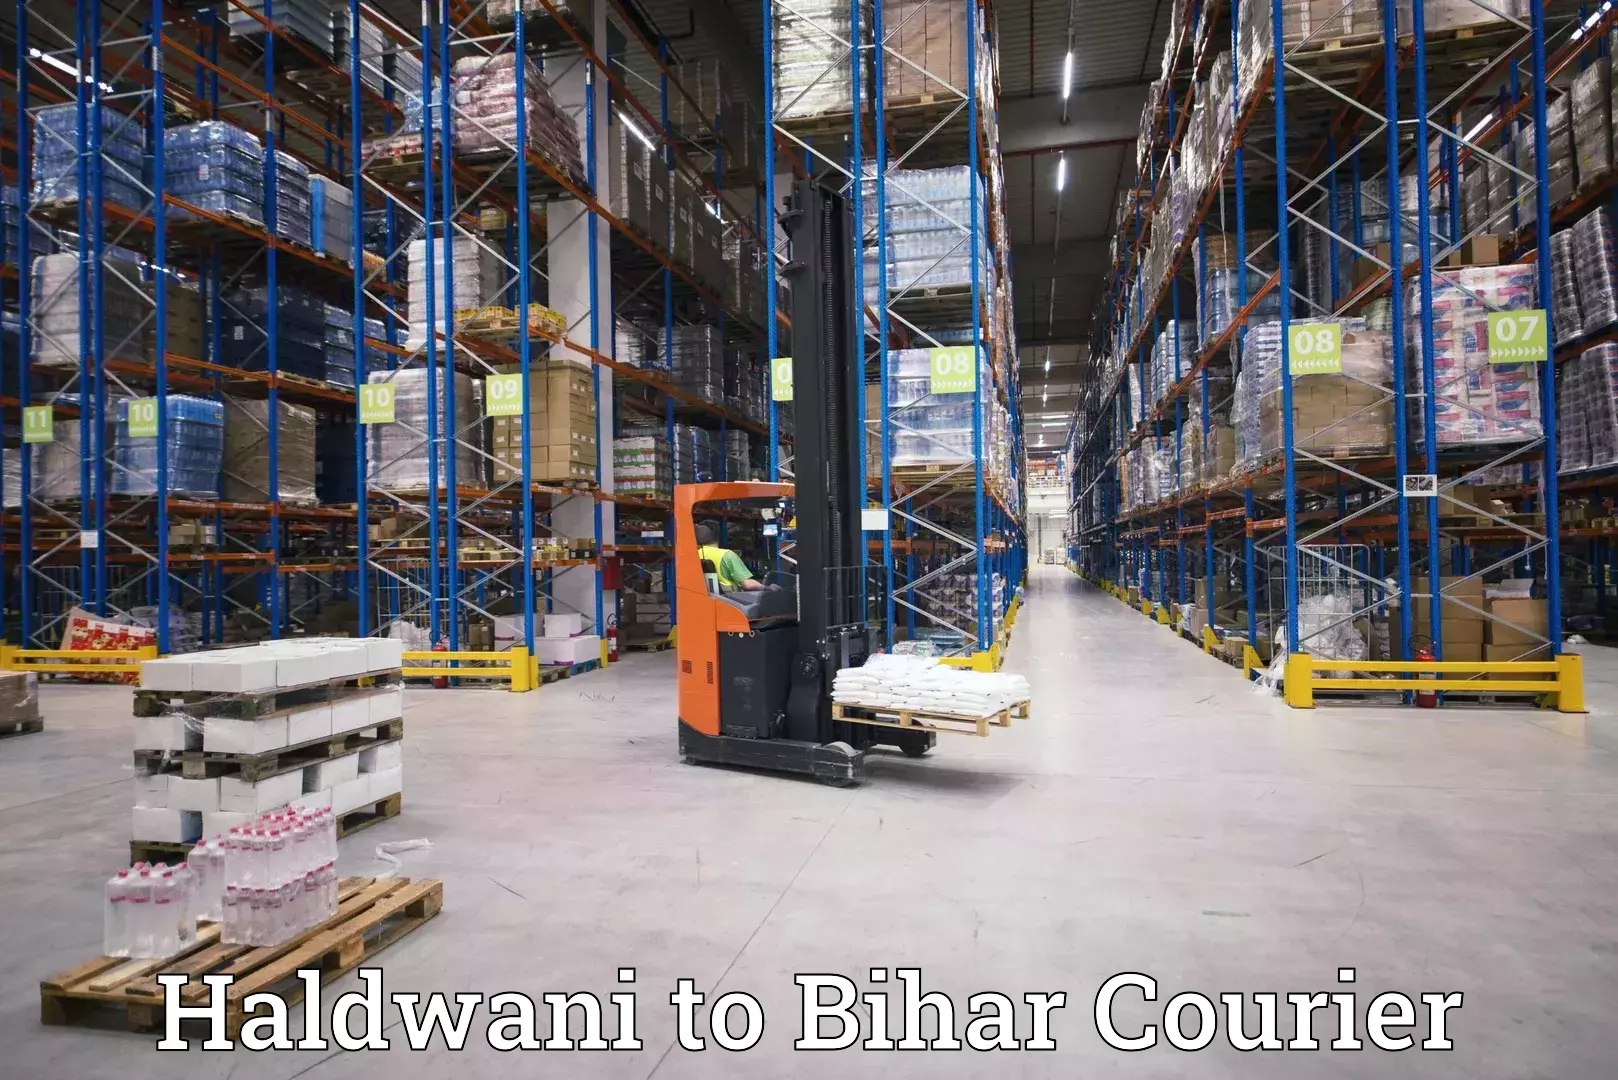 Courier service innovation Haldwani to Bihar